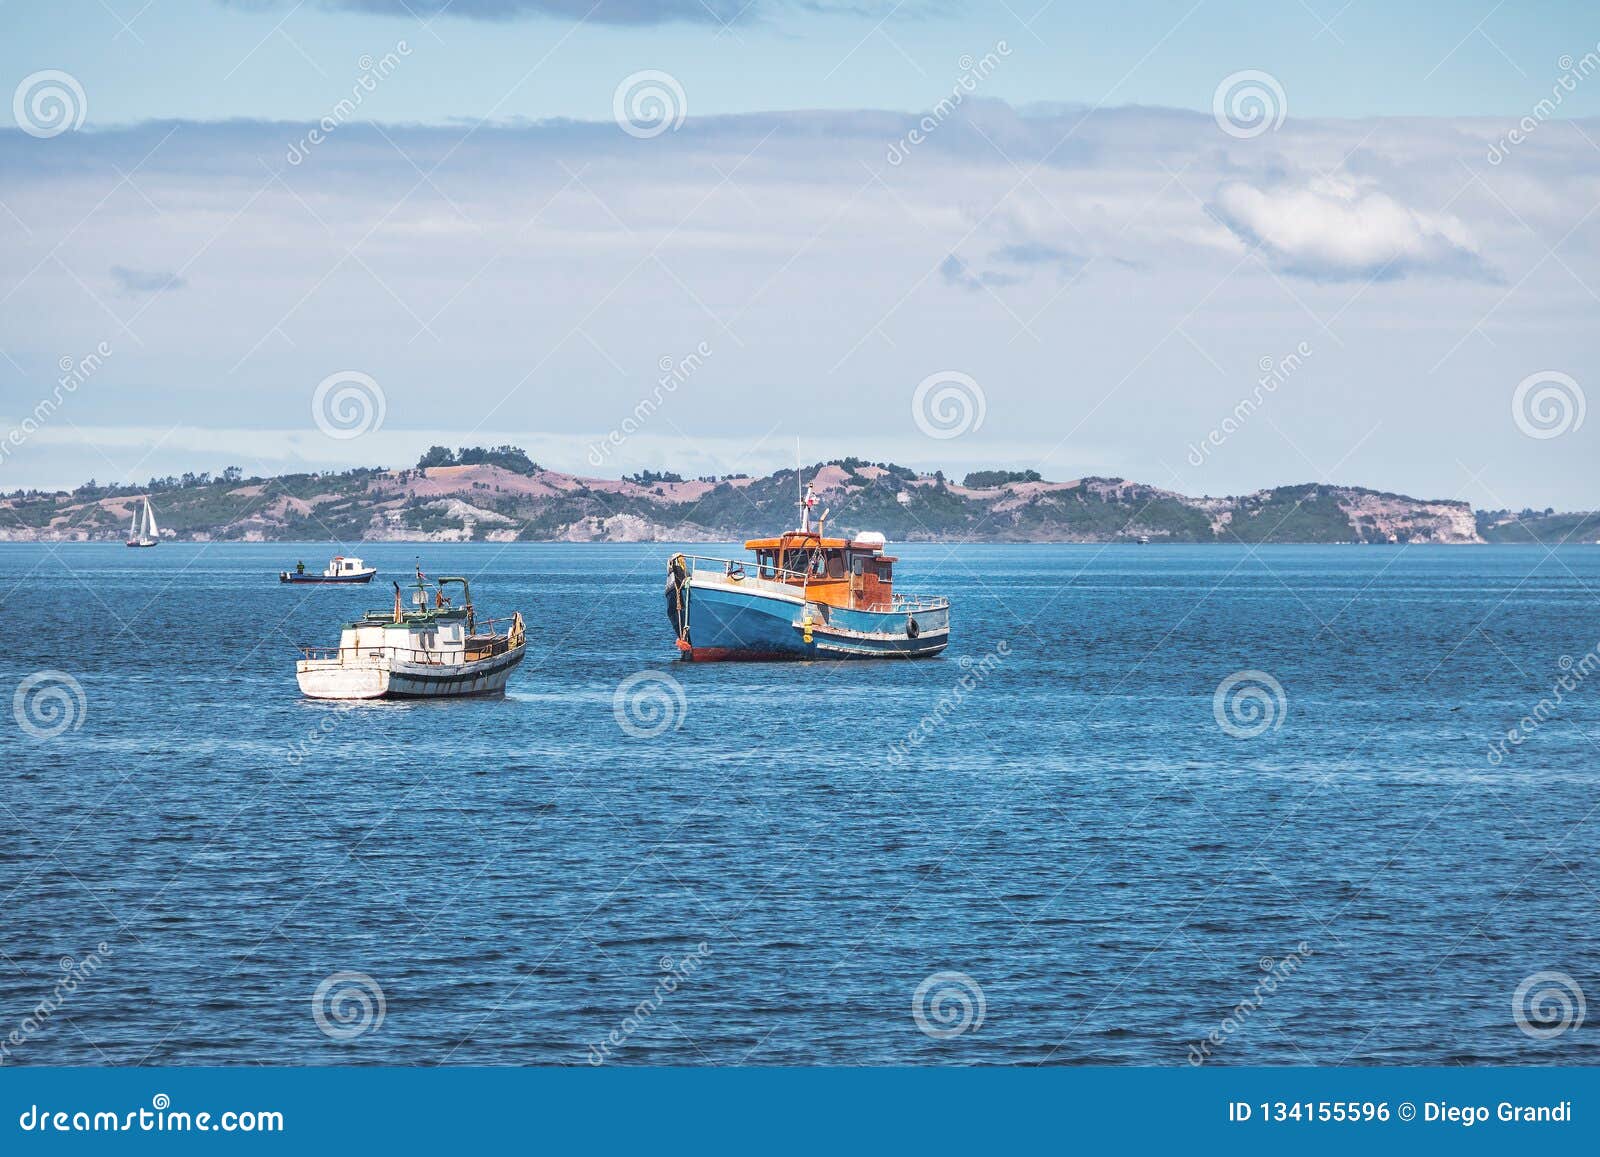 boats at tenaun bay - tenaun, chiloe island, chile